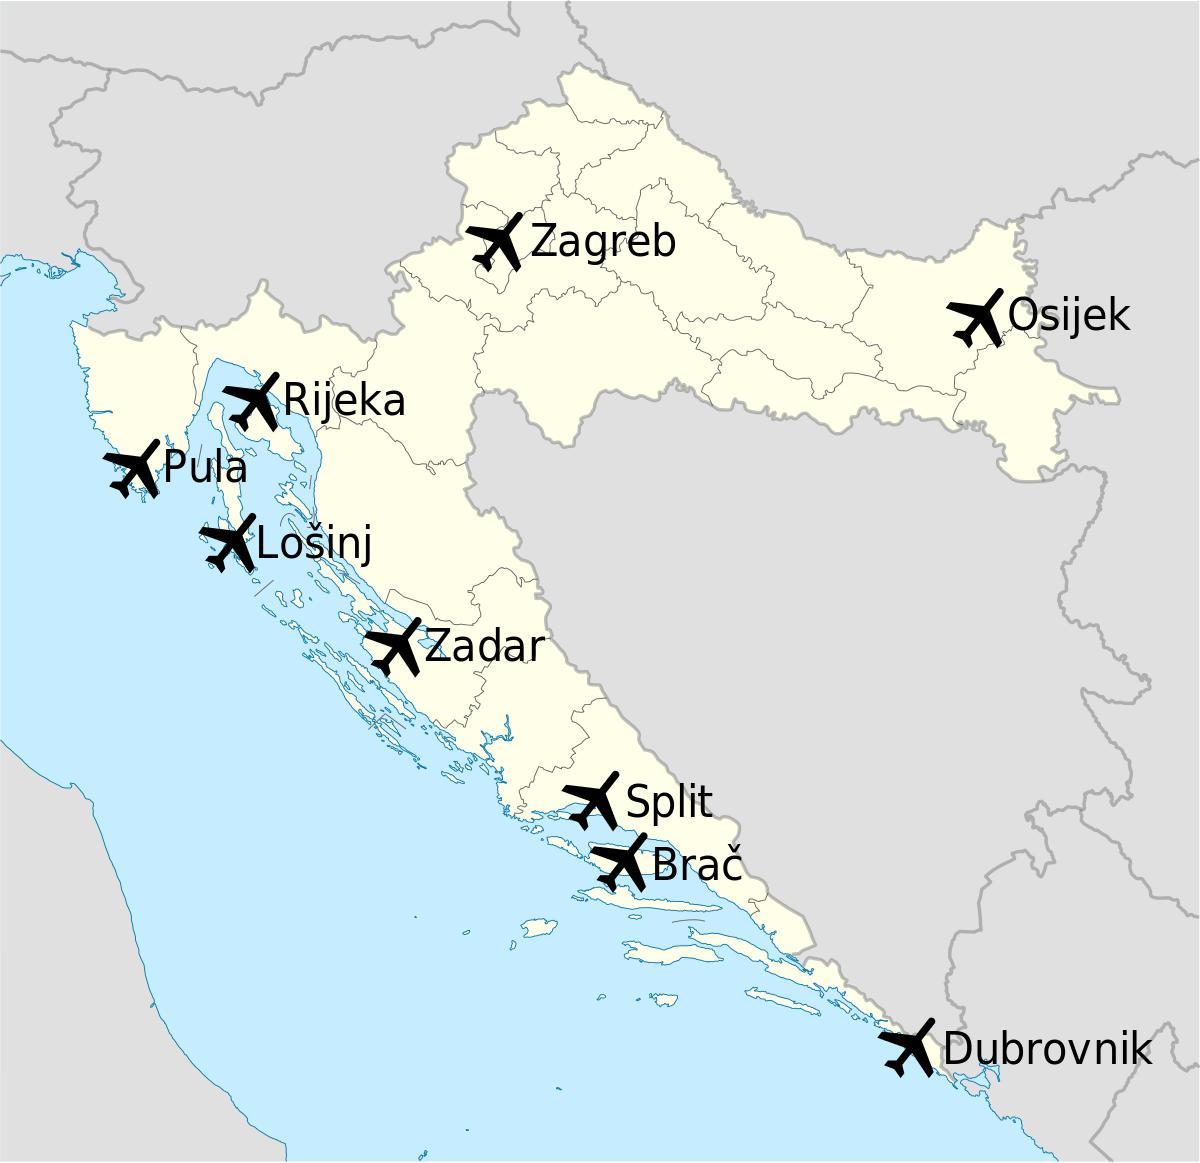 karta Hrvatske pokazuje zračne luke